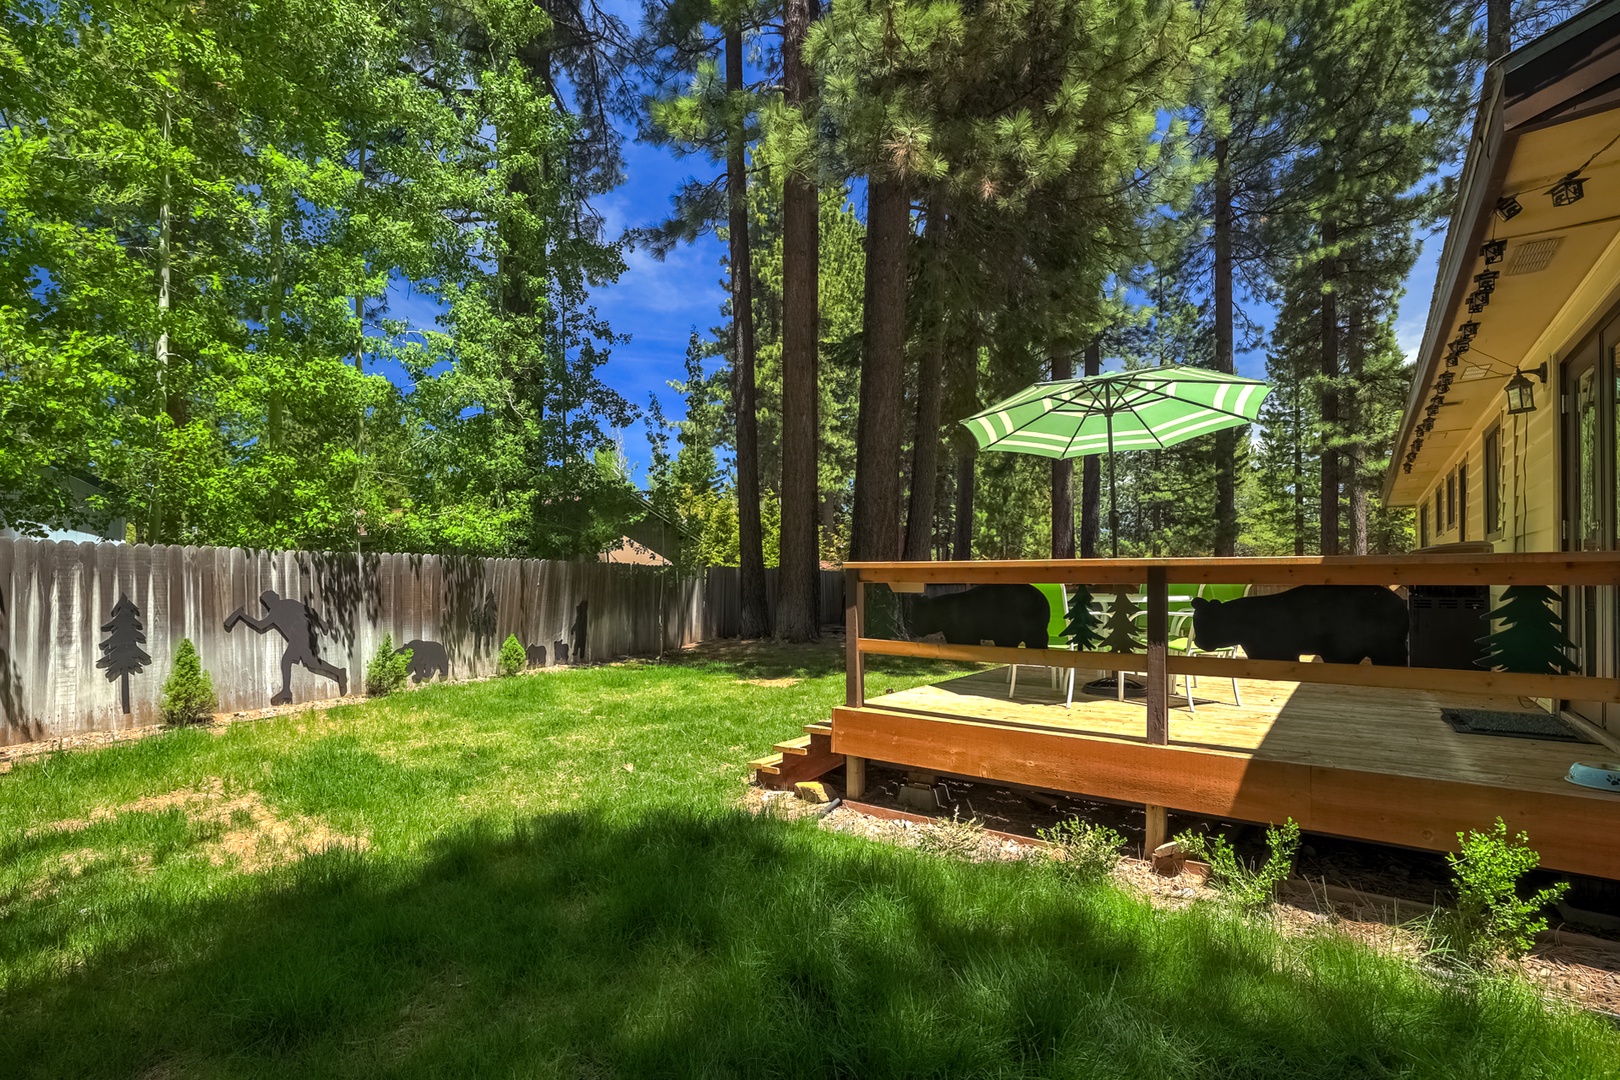 Fenced in backyard